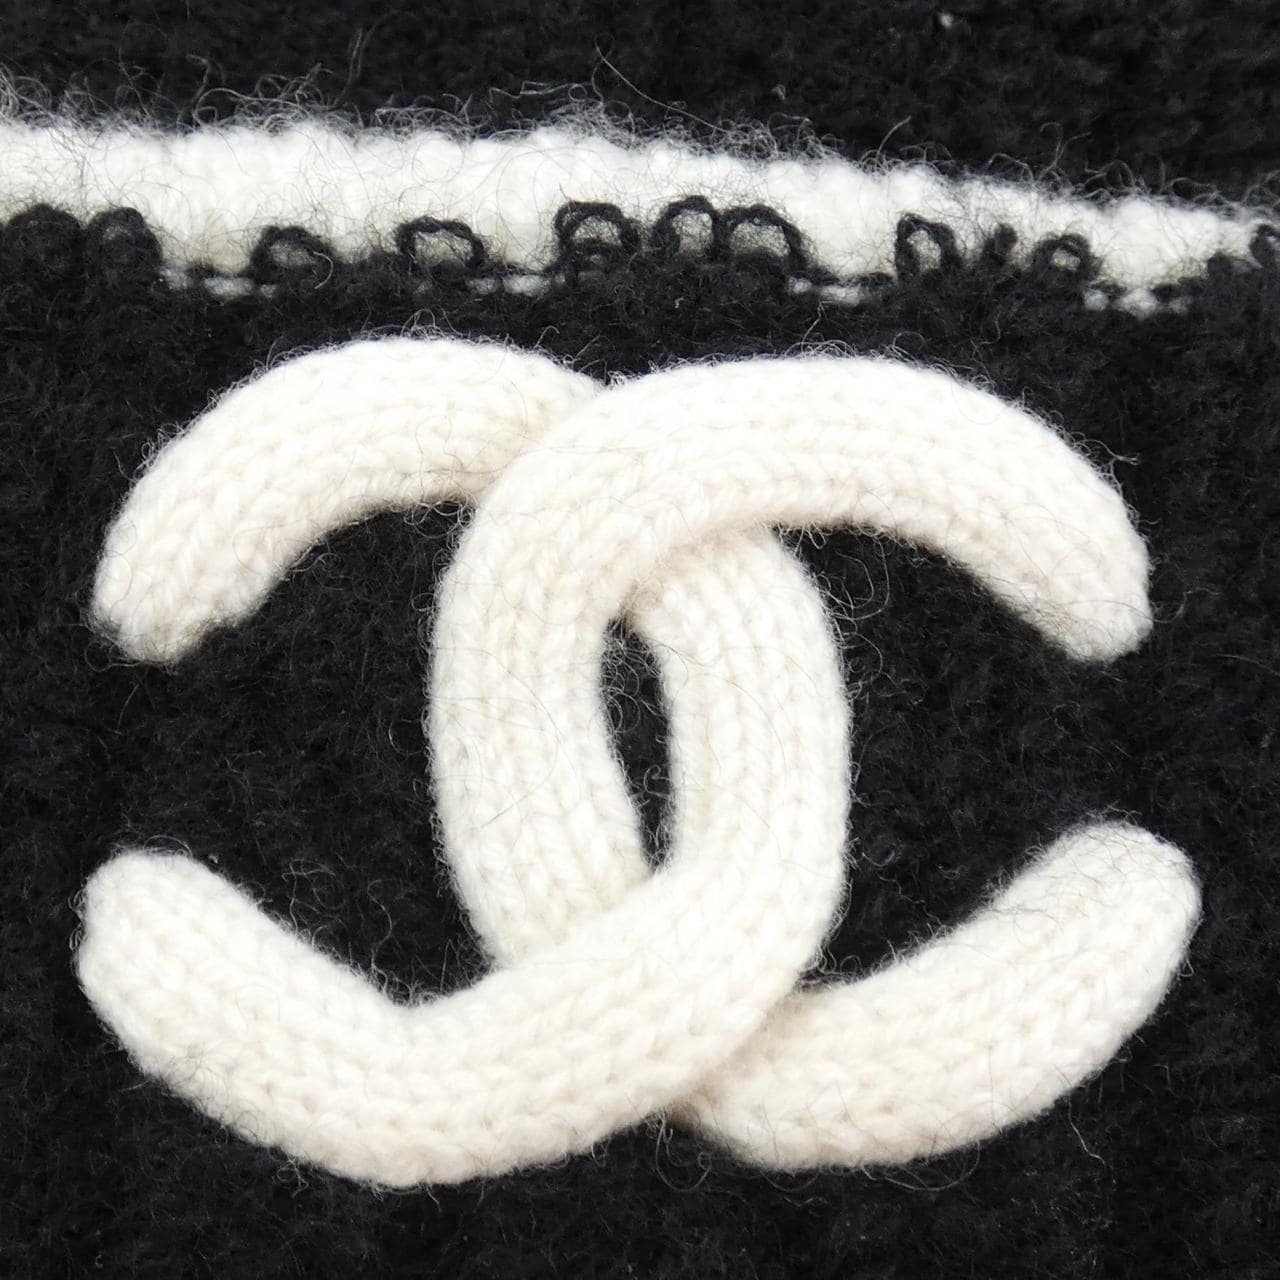 CHANEL CHANEL Knit Cap